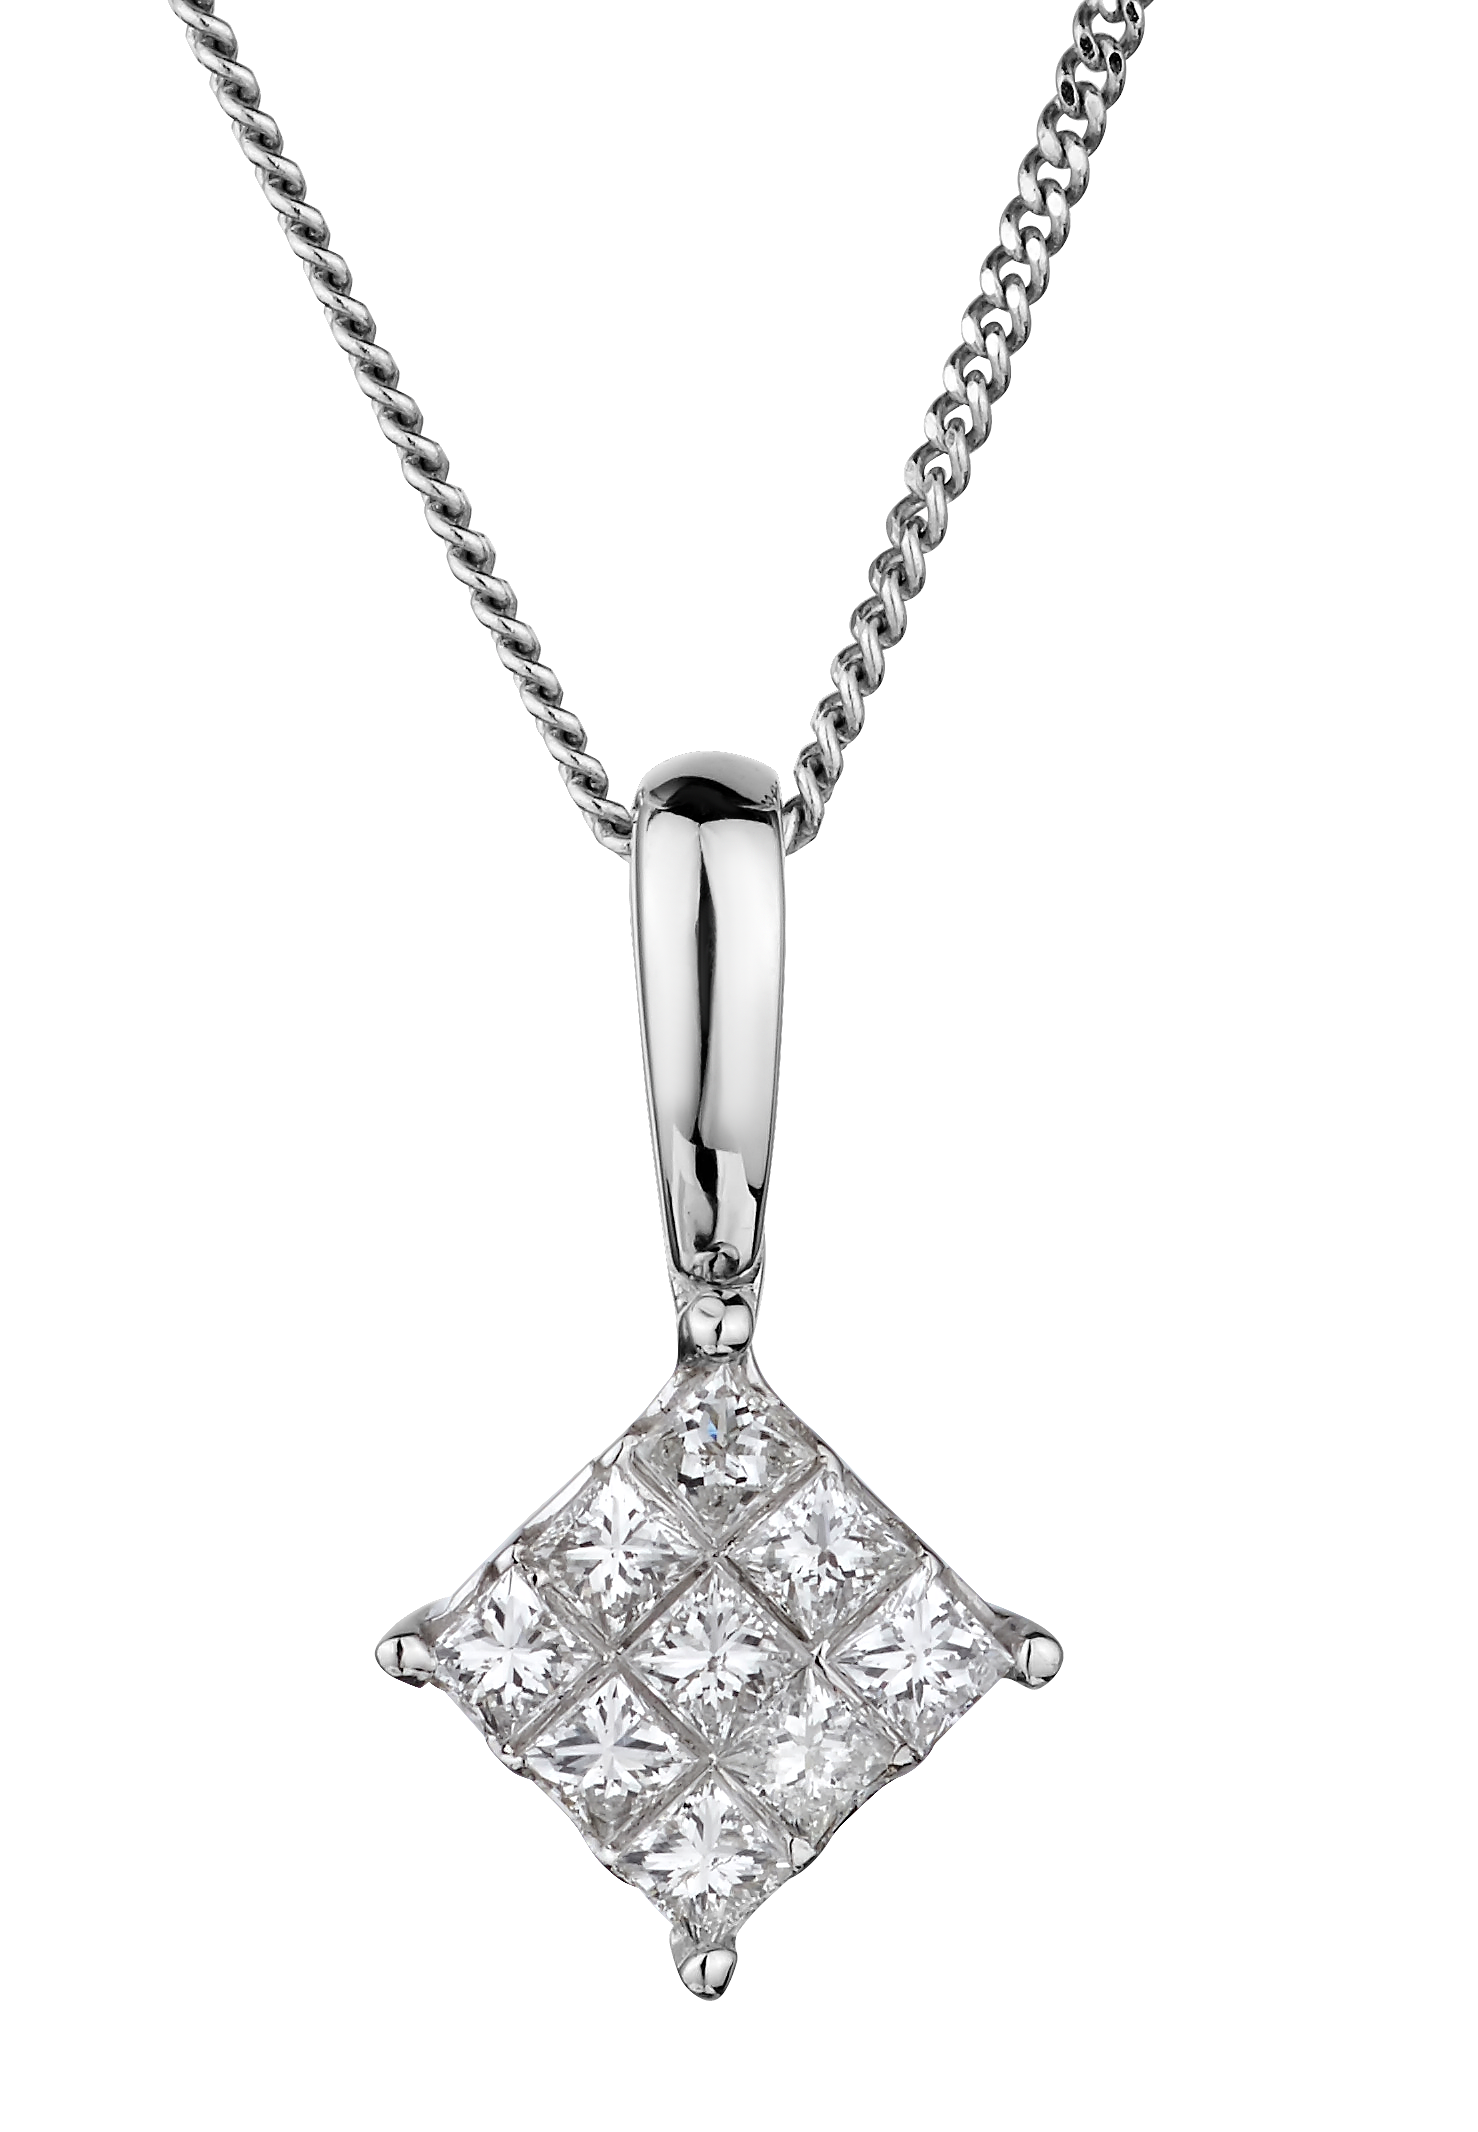 .25TDW Princess Cut Diamond Pendant,  10kt White Gold. Necklaces and Pendants. Griffin Jewellery Designs.